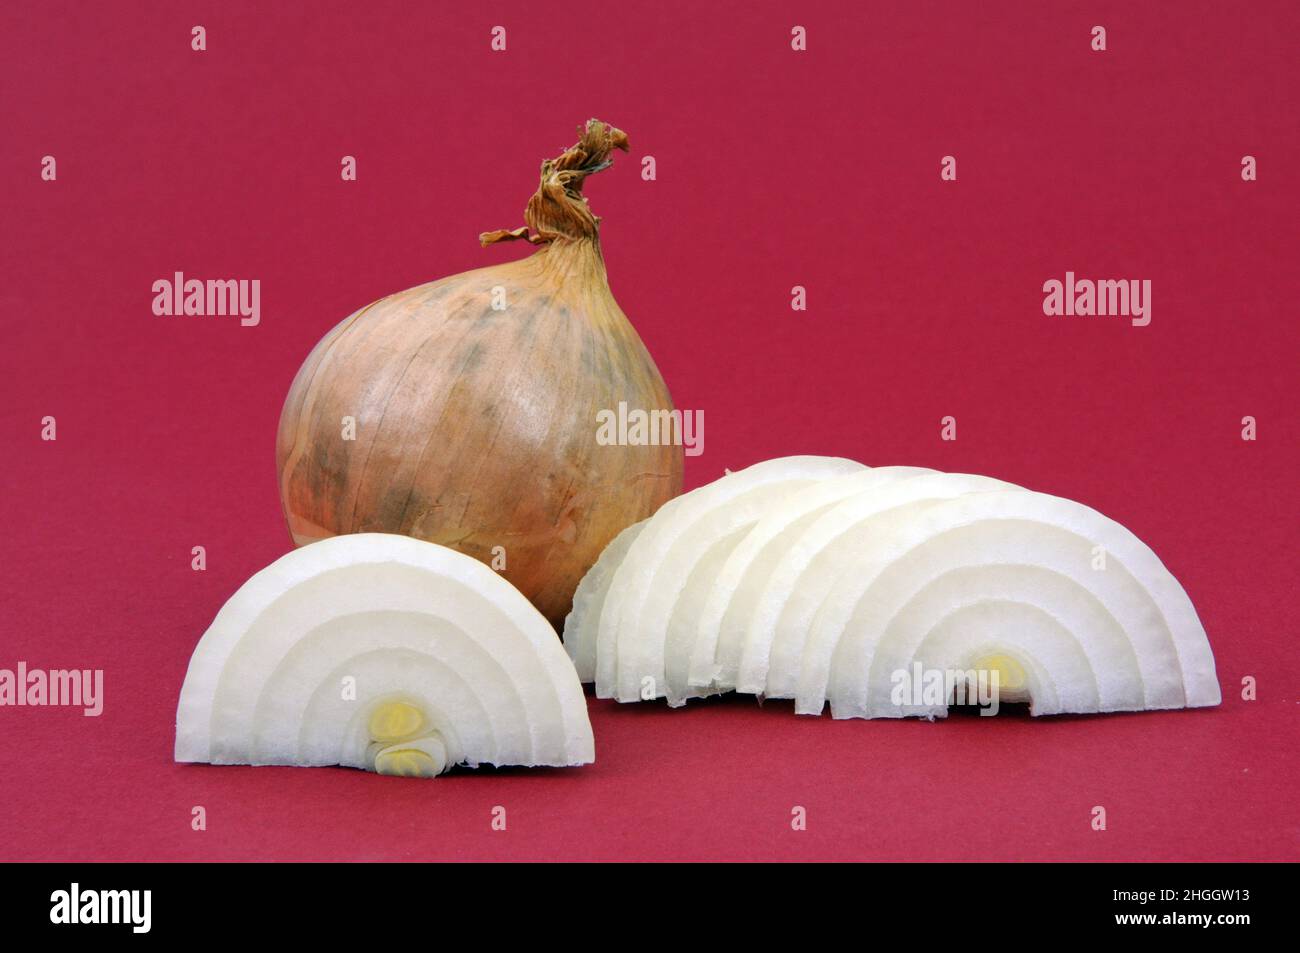 Garden onion, Bulb Onion, Common Onion (Allium cepa), Whole and sliced onion Stock Photo